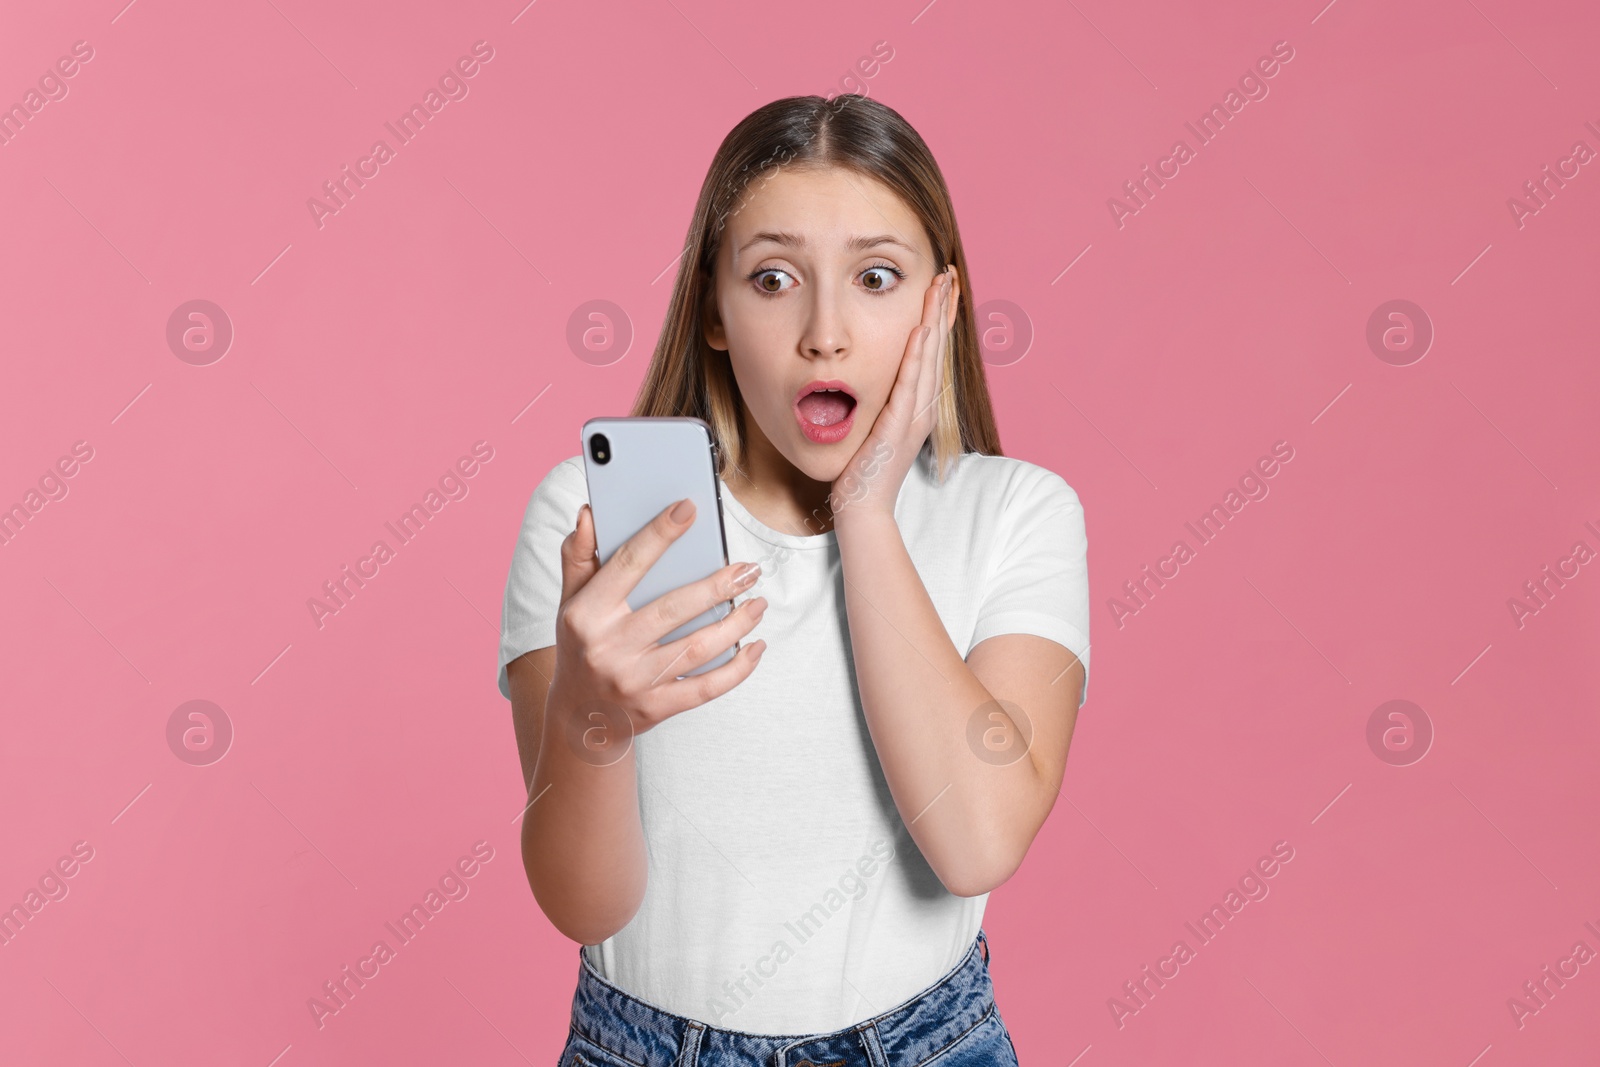 Photo of Shocked teenage girl with smartphone on pink background